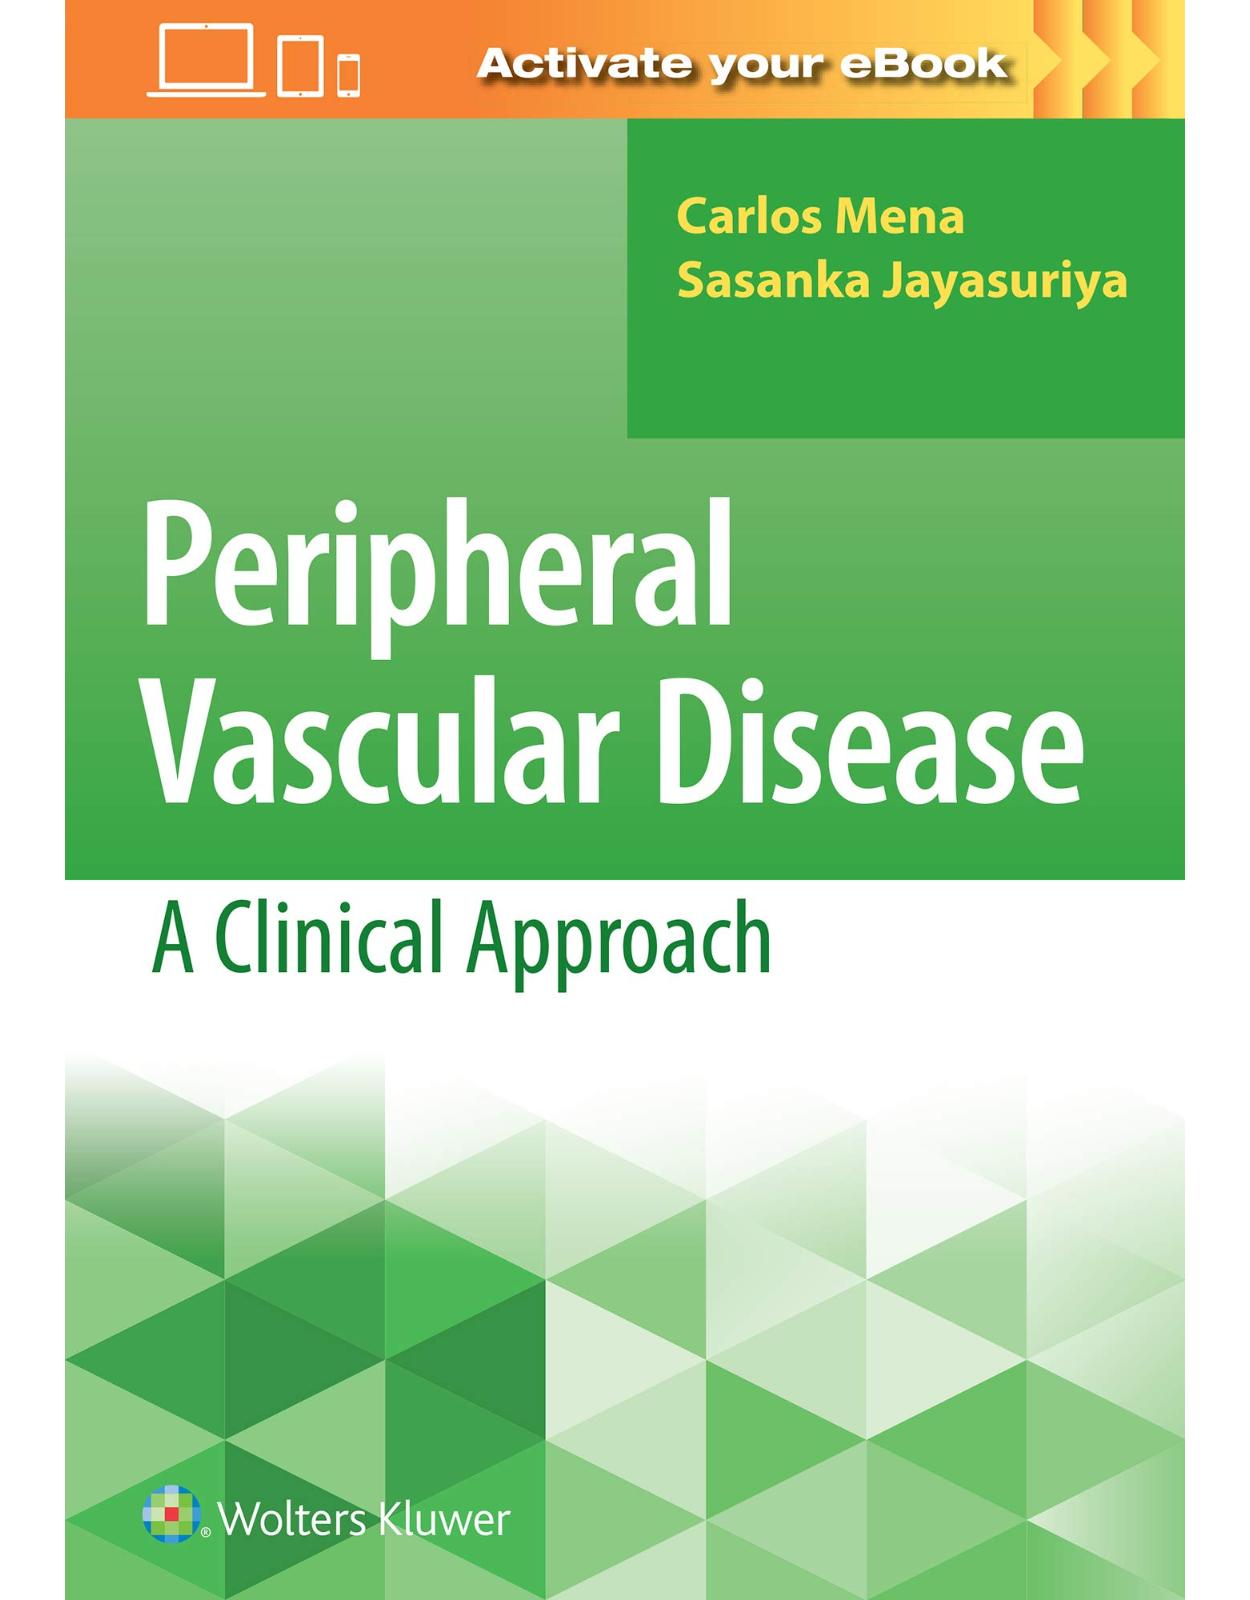 Peripheral Vascular Disease: A Clinical Approach